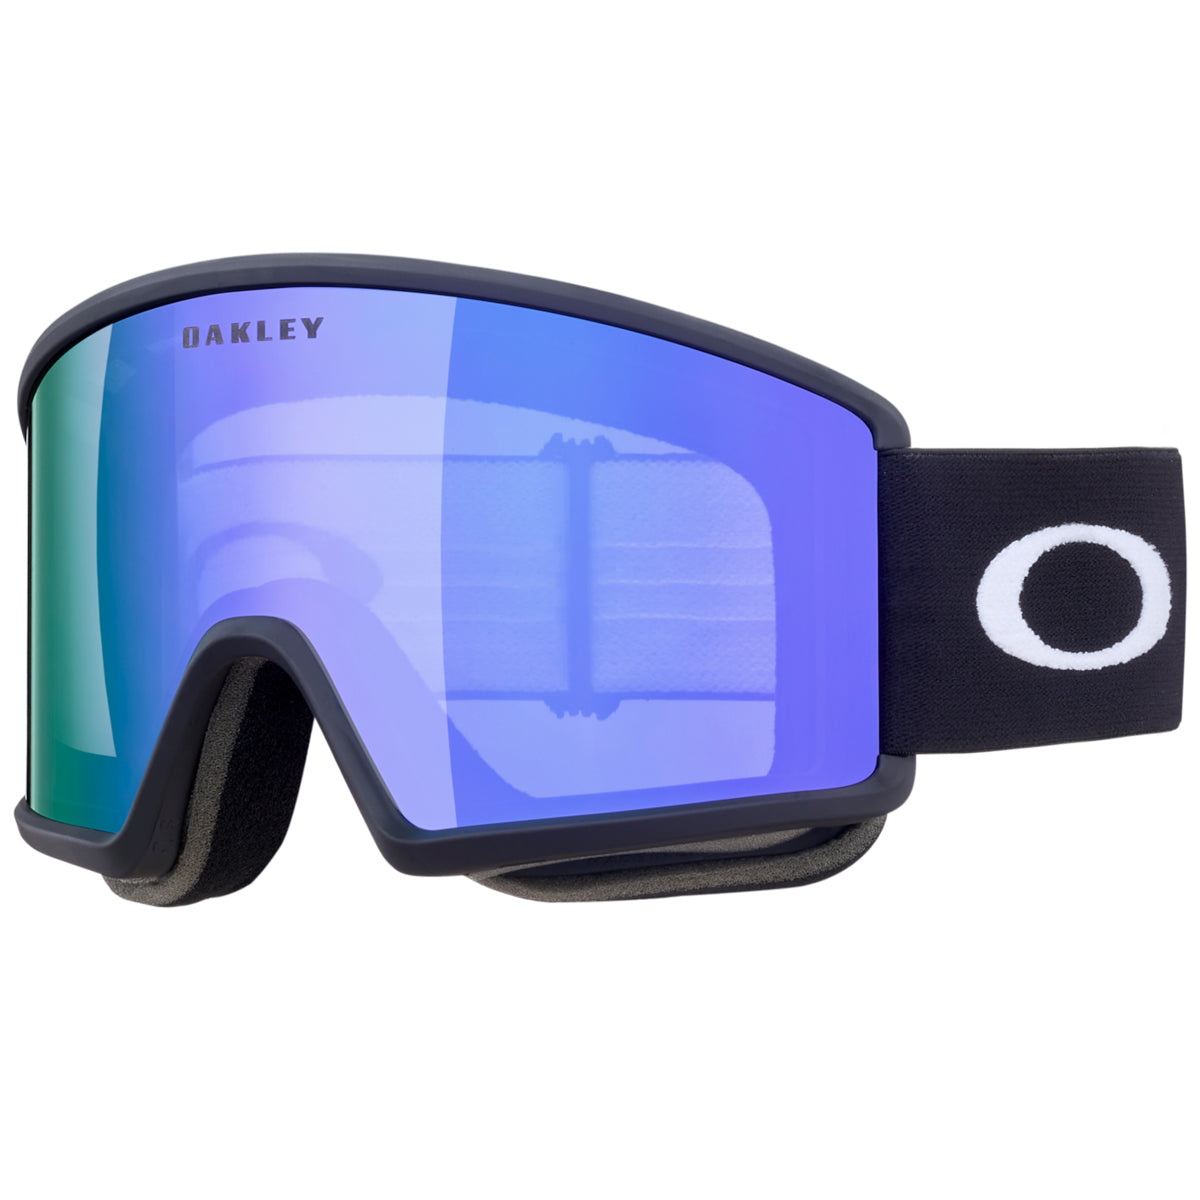 Oakley Target Line Snowboard Goggles - Matte Black/Violet Iridium image 1